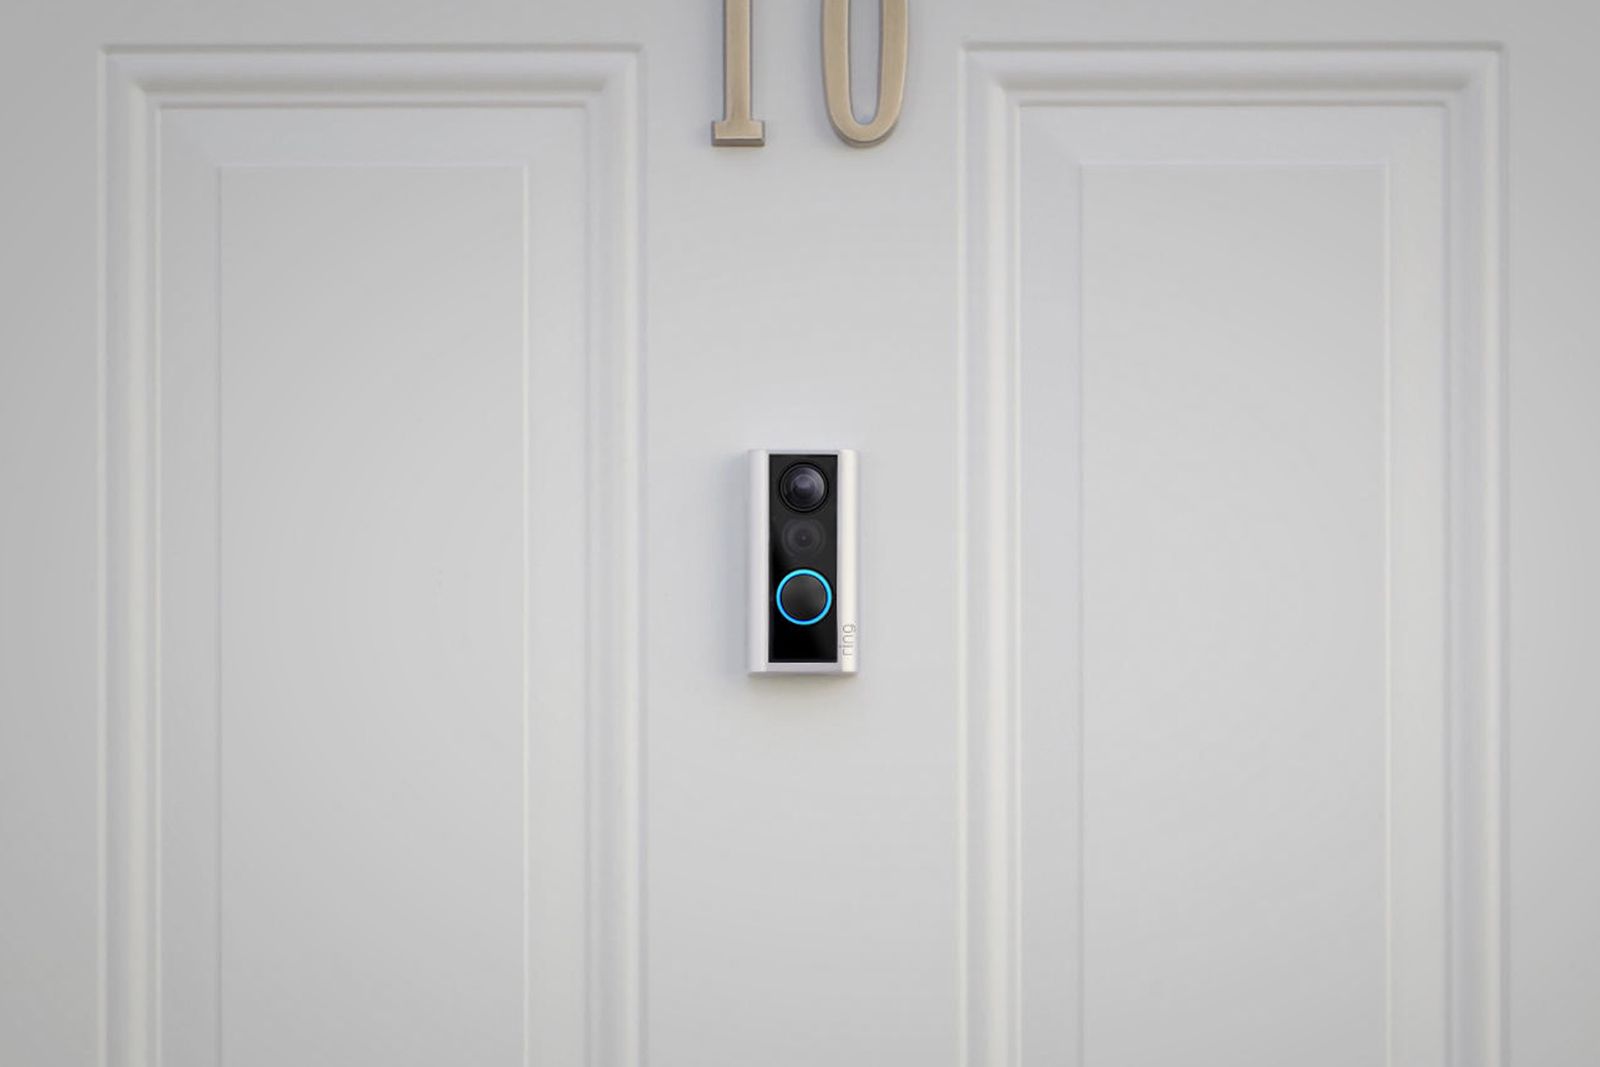 Ring unveils Door View Cam smart lighting system and new Alarm sensors image 1